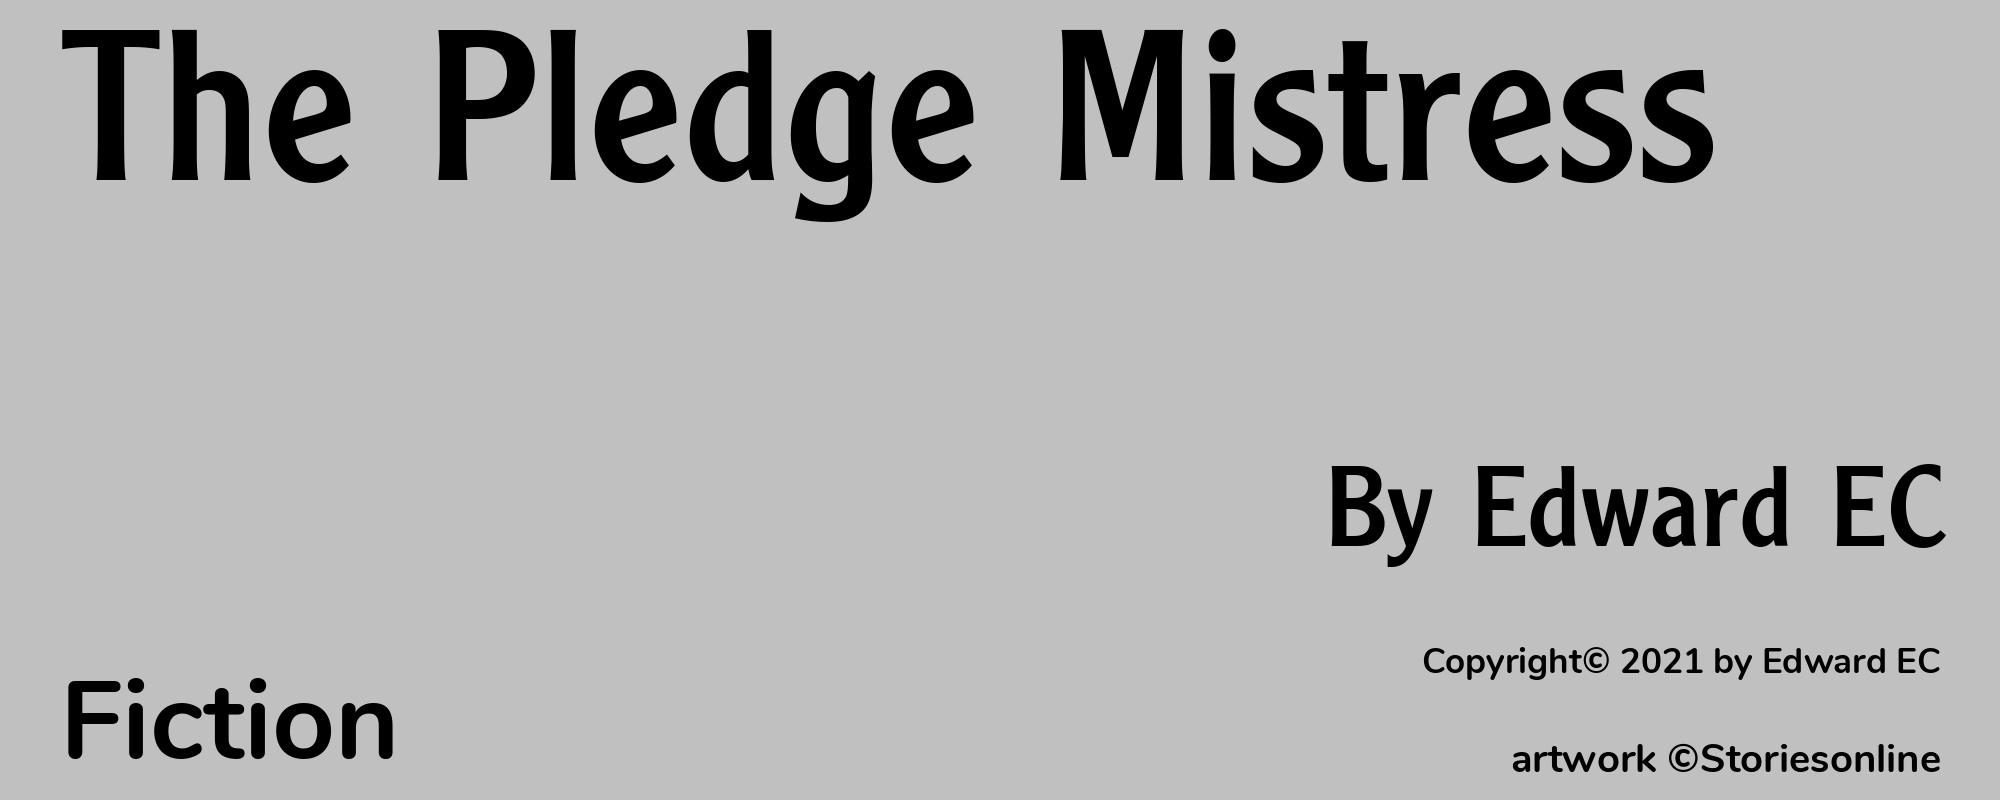 The Pledge Mistress - Cover